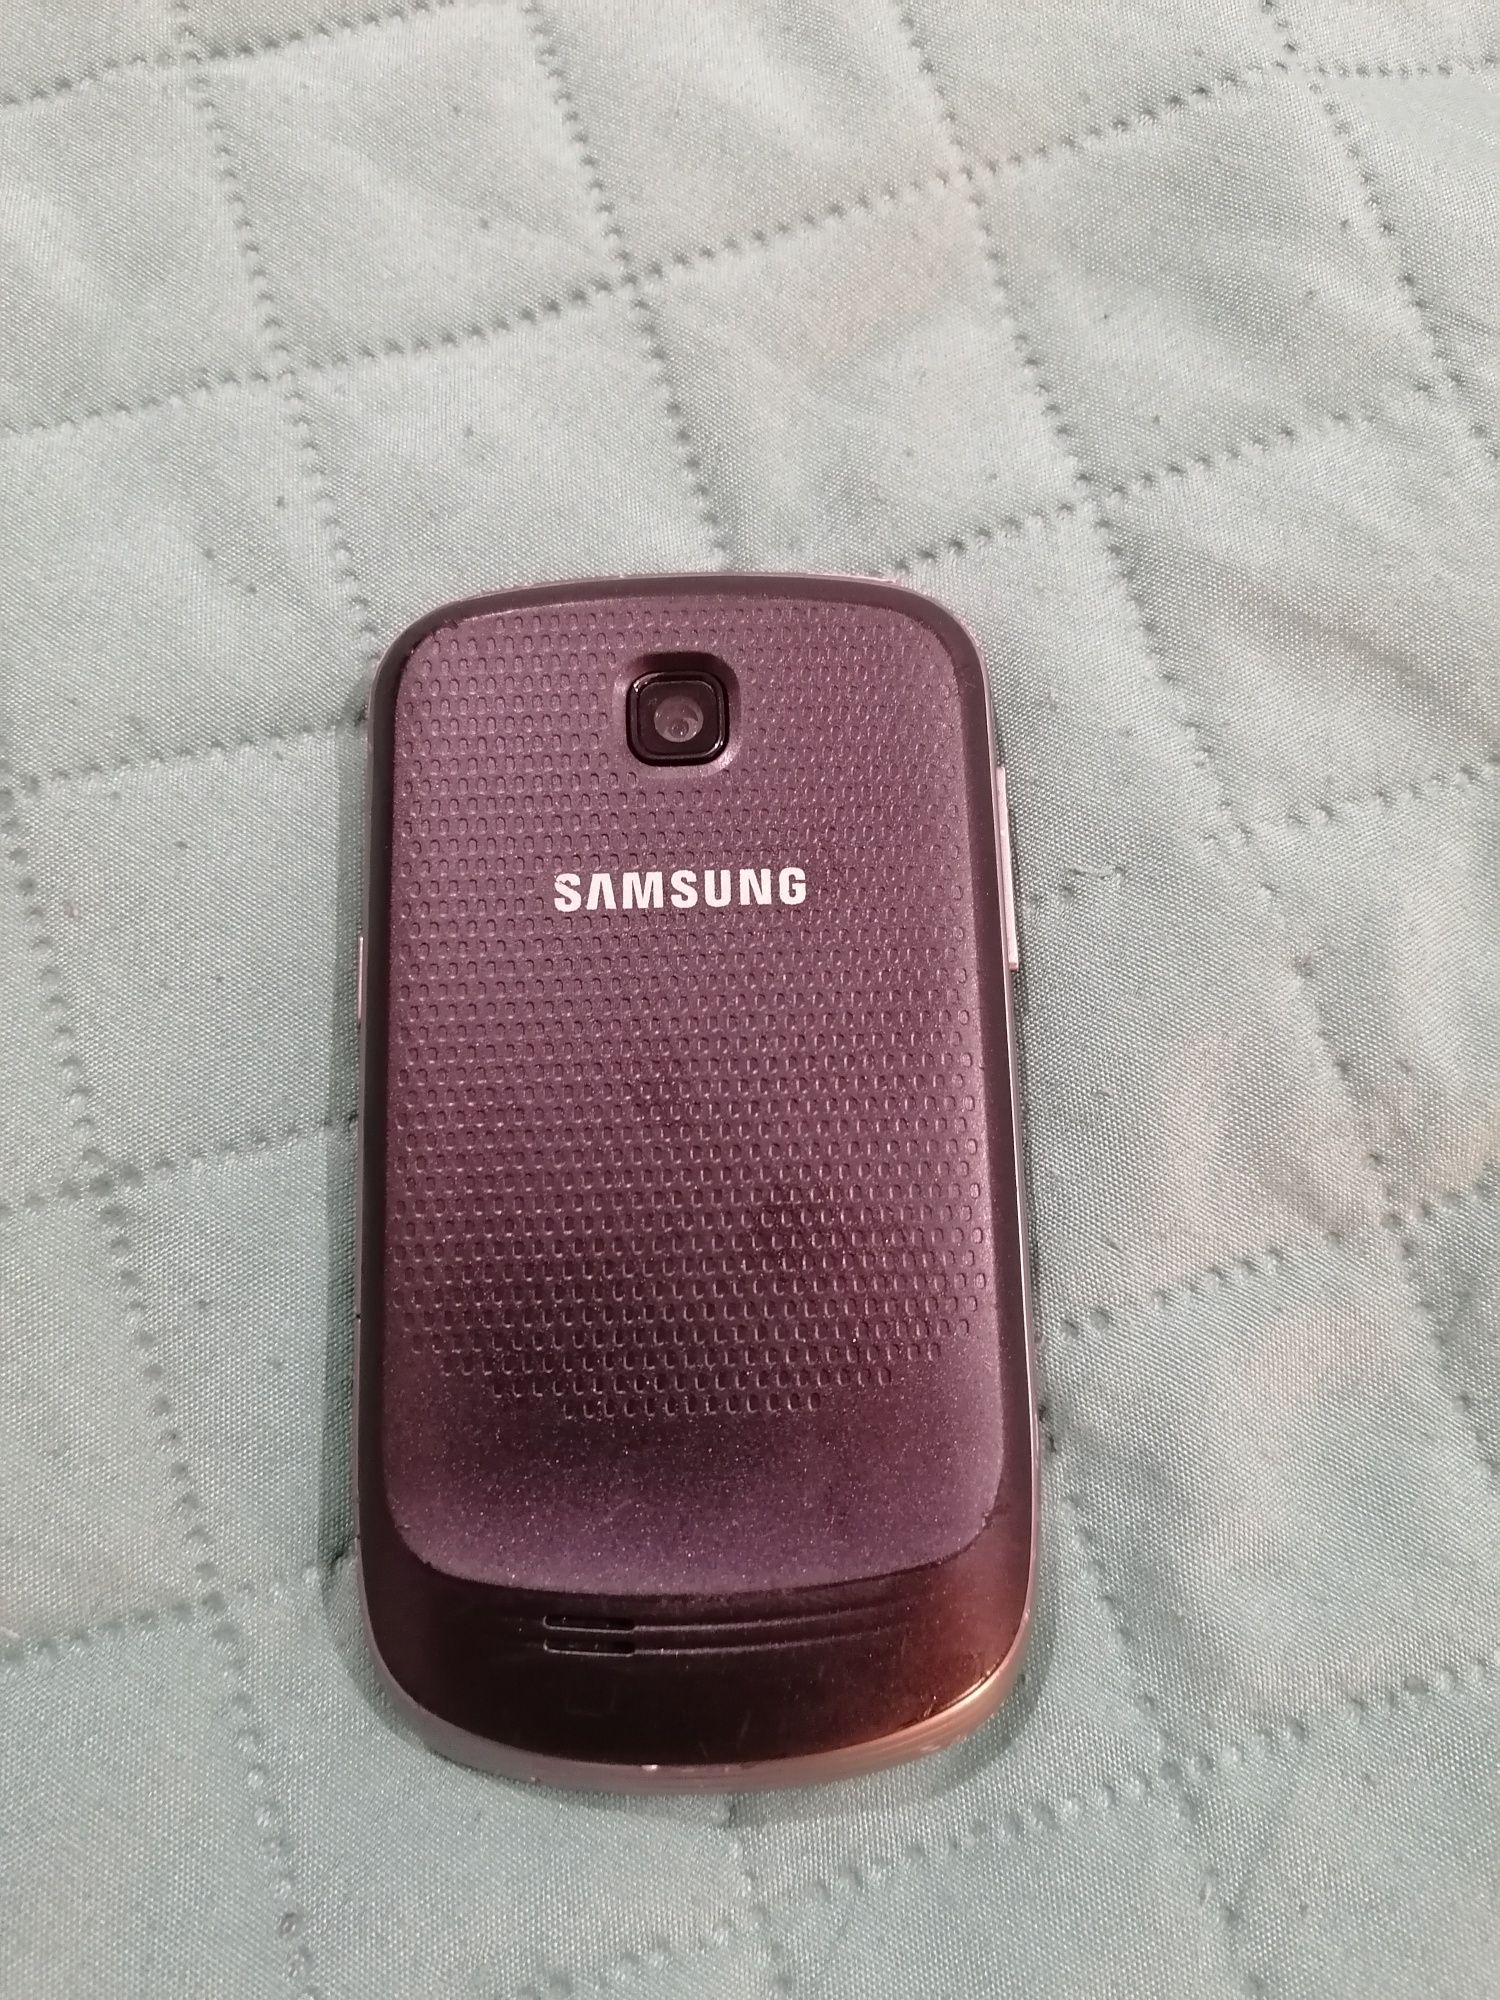 Samsung gt-s5570 Vodafone